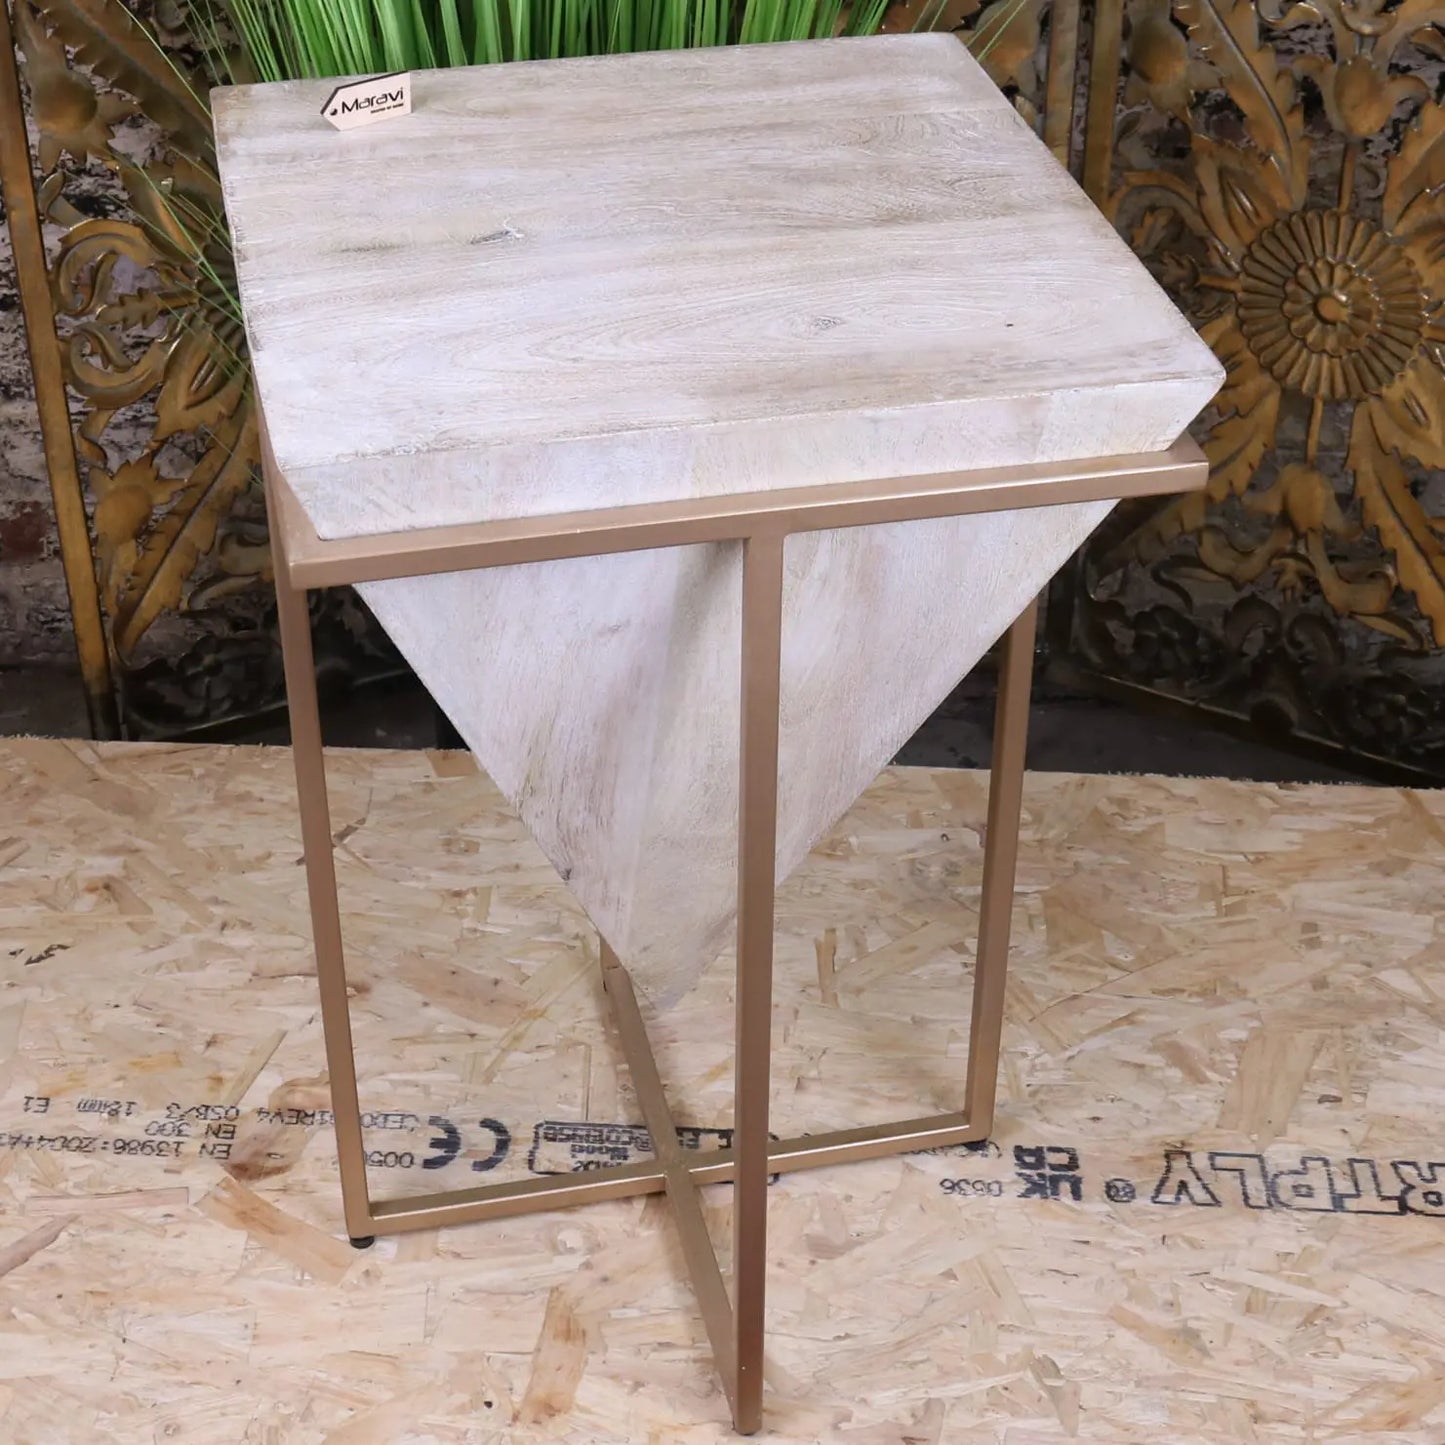 Tiru Diamond Accent Side Table - Angled Top View